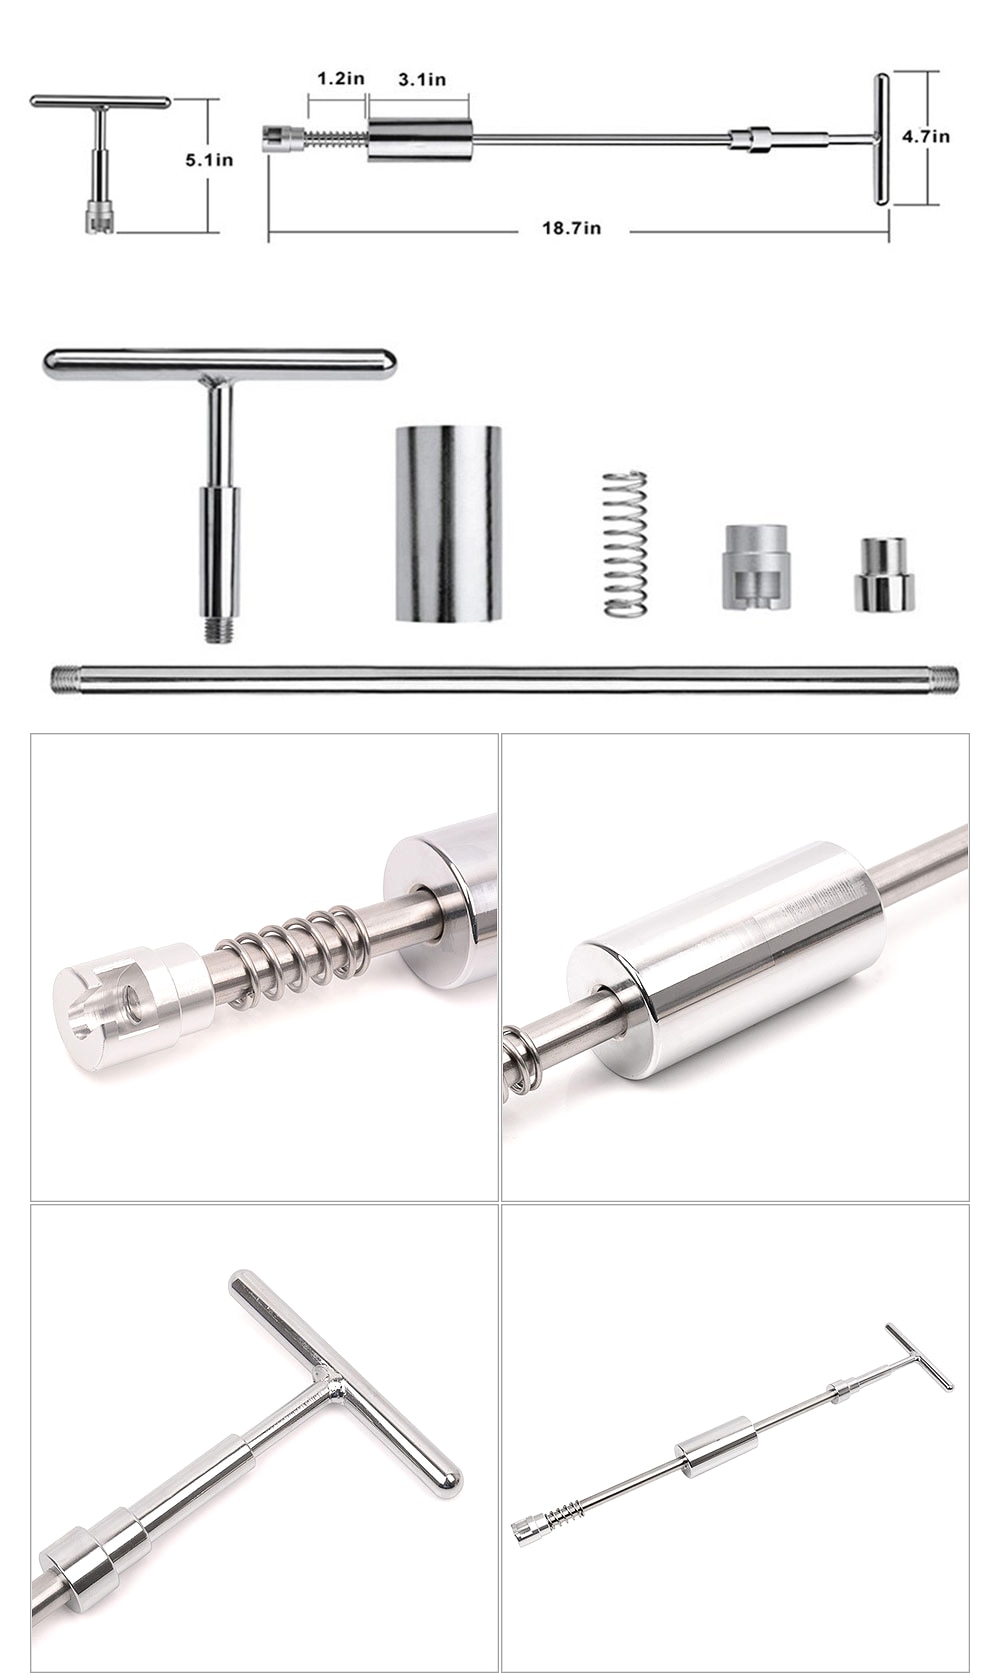 Car body Dent Removal Tool Dent Repair Puller Kit Slide Hammer Suction Cups For Hail Damage Car Dent Repair Tool